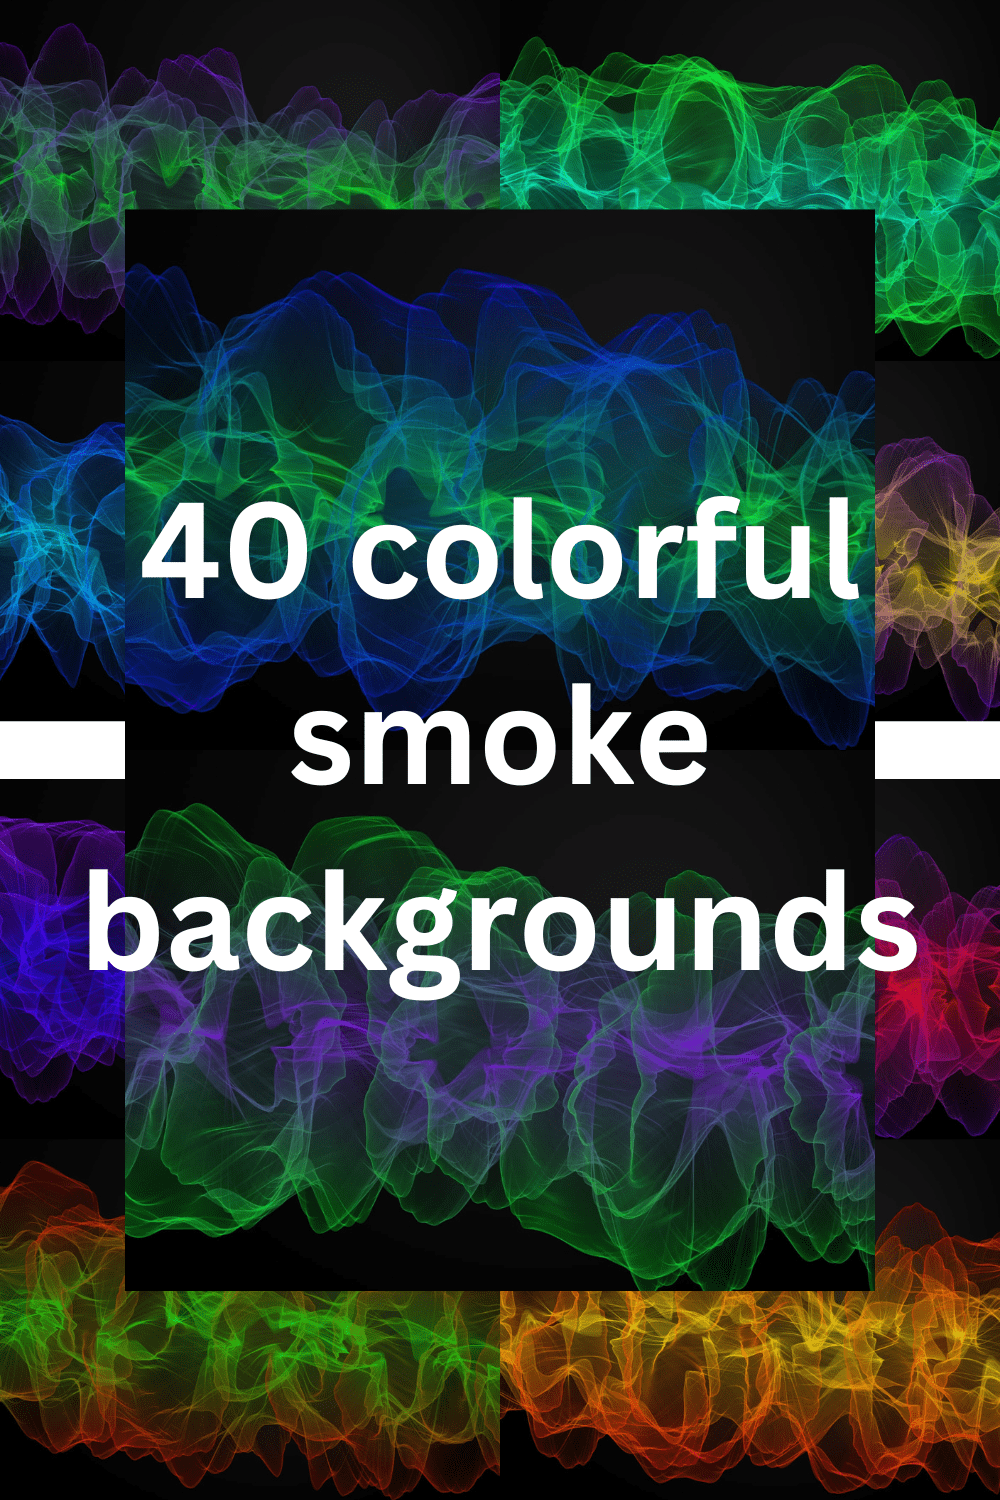 Colored Smoke Backgrounds Pinterest image.